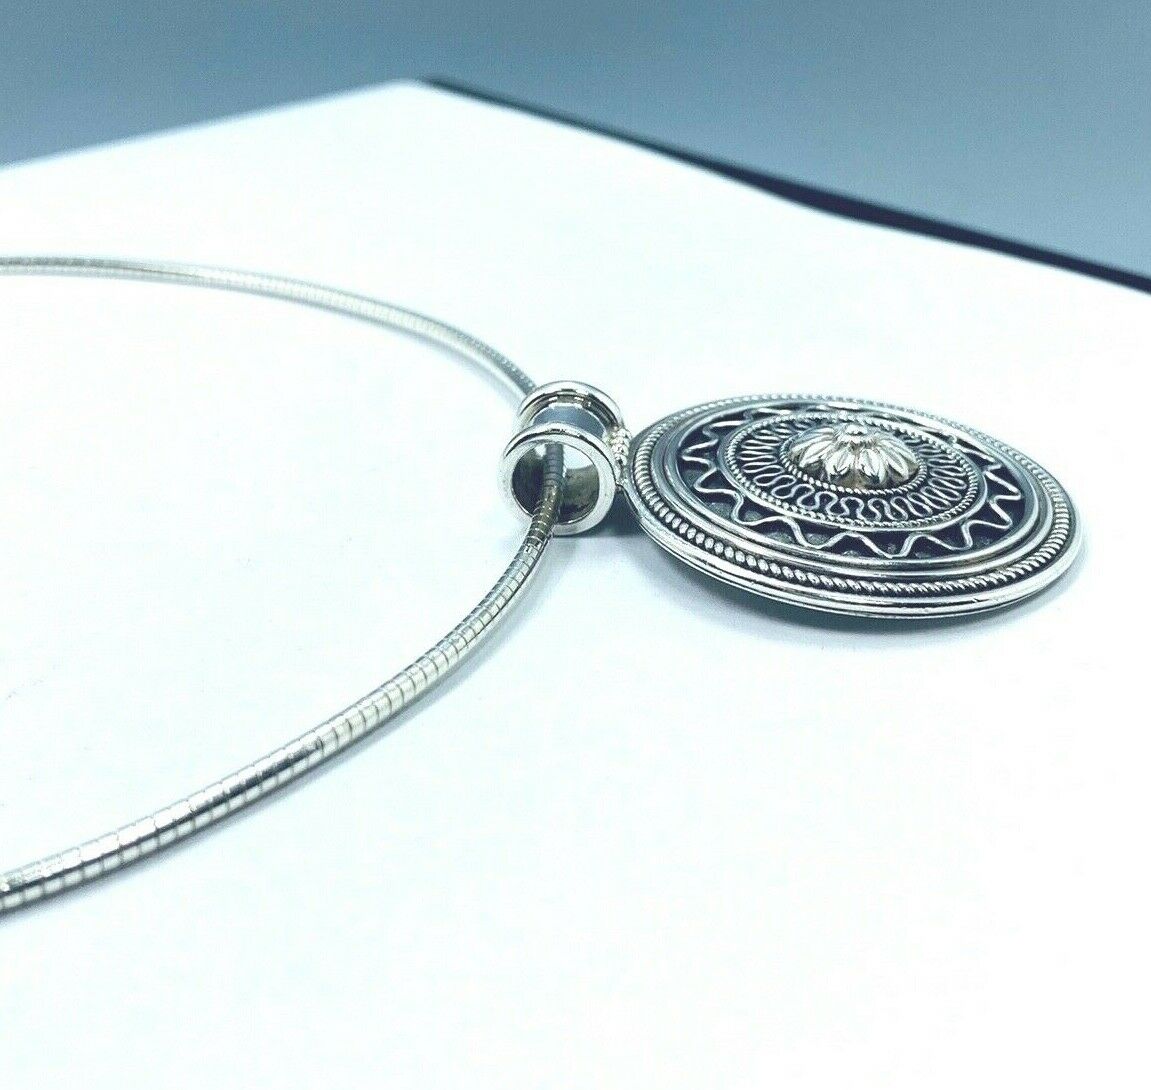 Zara choker necklace with diamond pendant and circle pendant , Gold and  Suede. | Circle pendant, Diamond pendant, Choker necklace